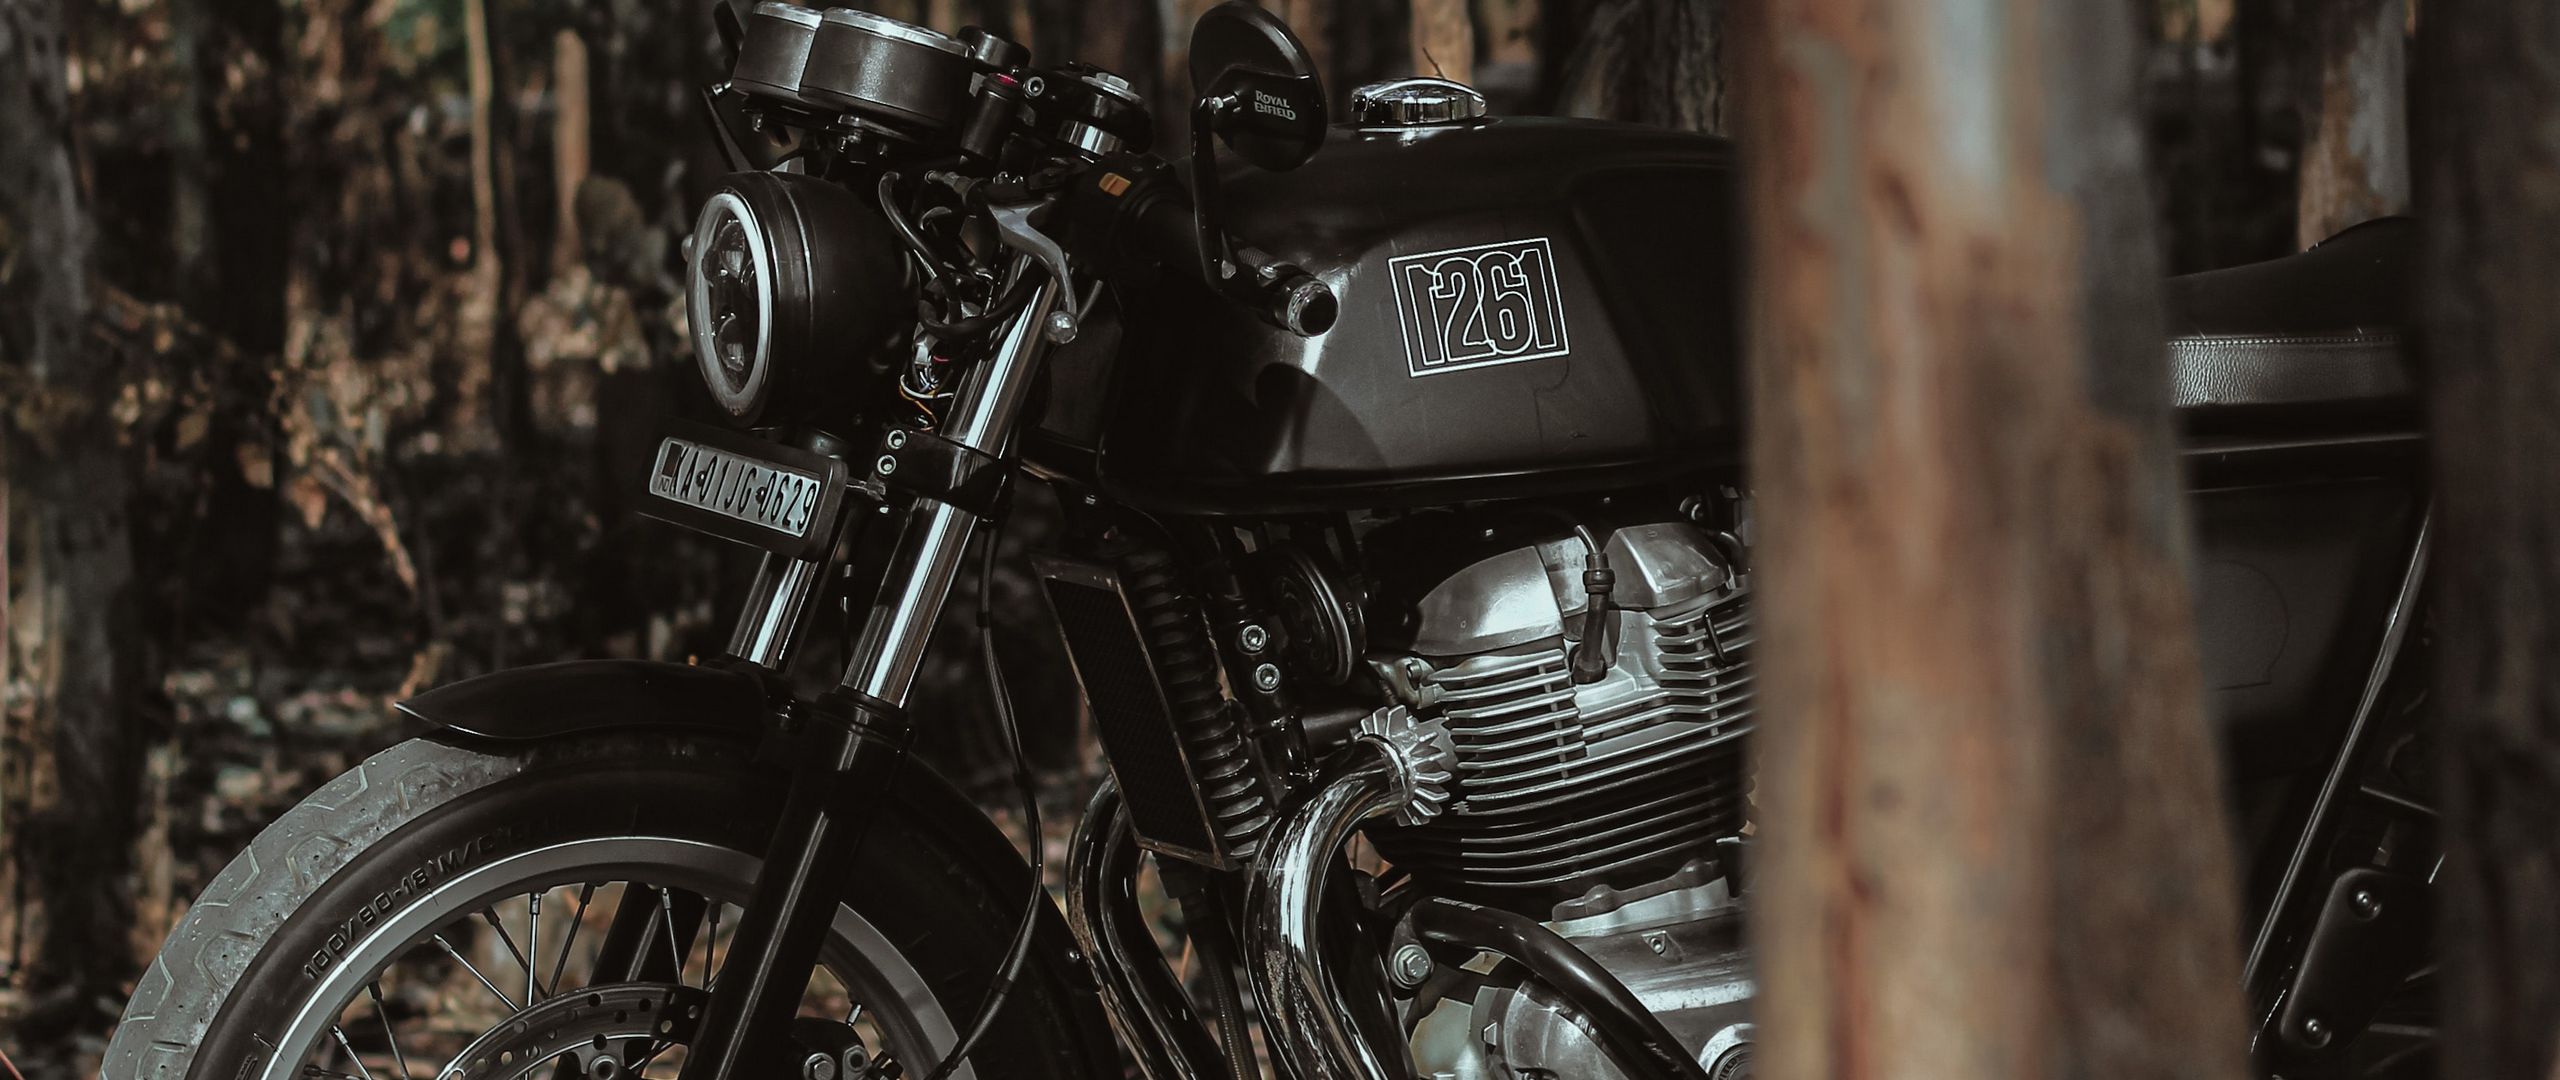 2560x1080 Wallpaper royal enfield, motorcycle, bike, black, forest